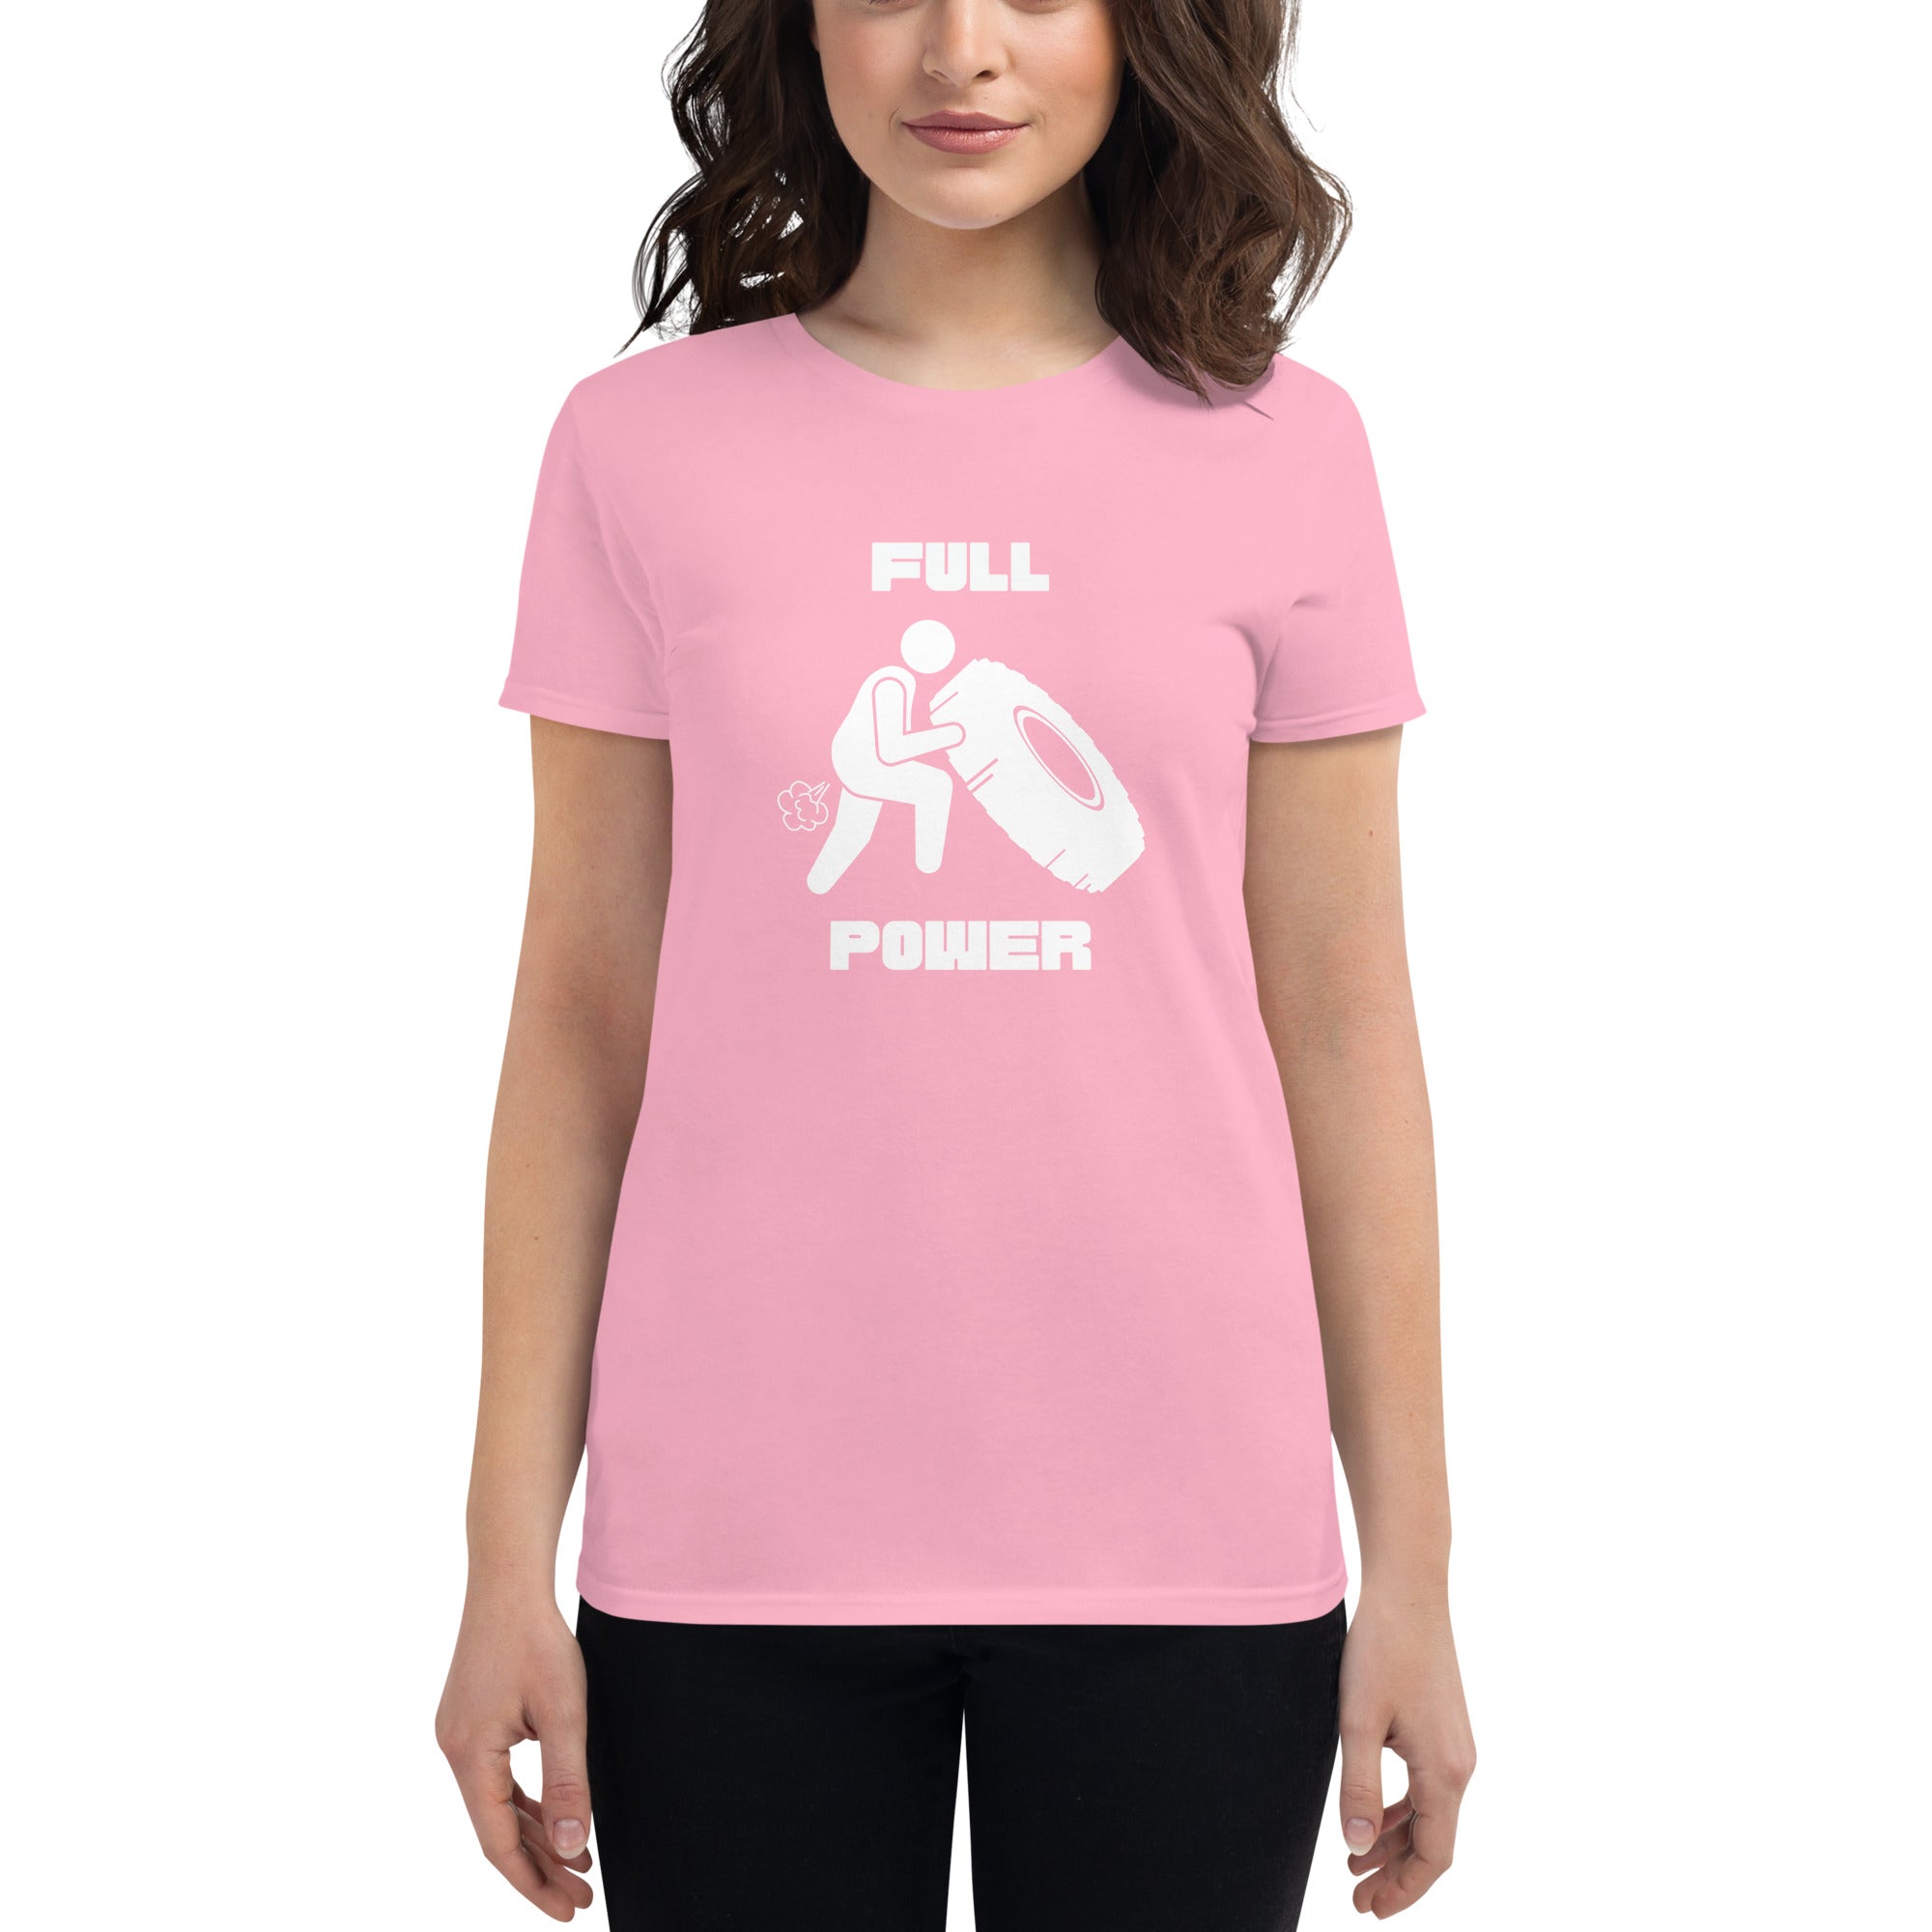 Full Power Women's Fitted T-Shirt